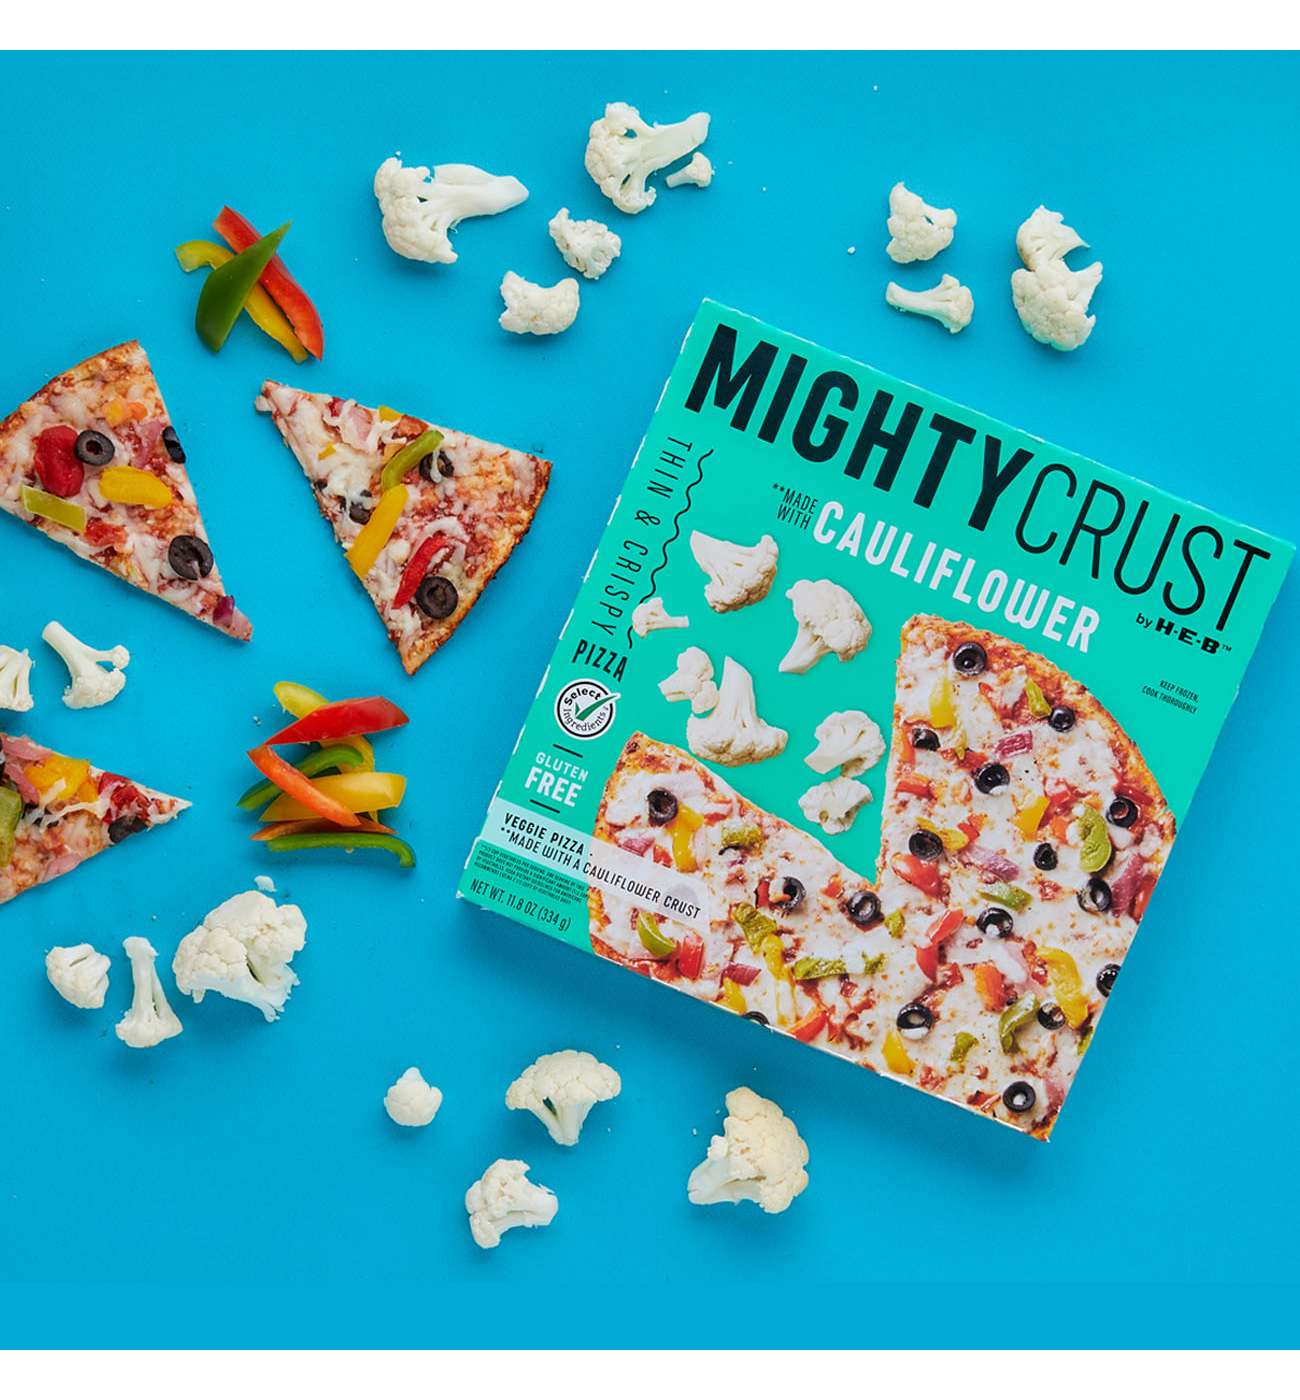 MightyCrust by H-E-B Frozen Cauliflower Pizza - Veggie; image 2 of 4